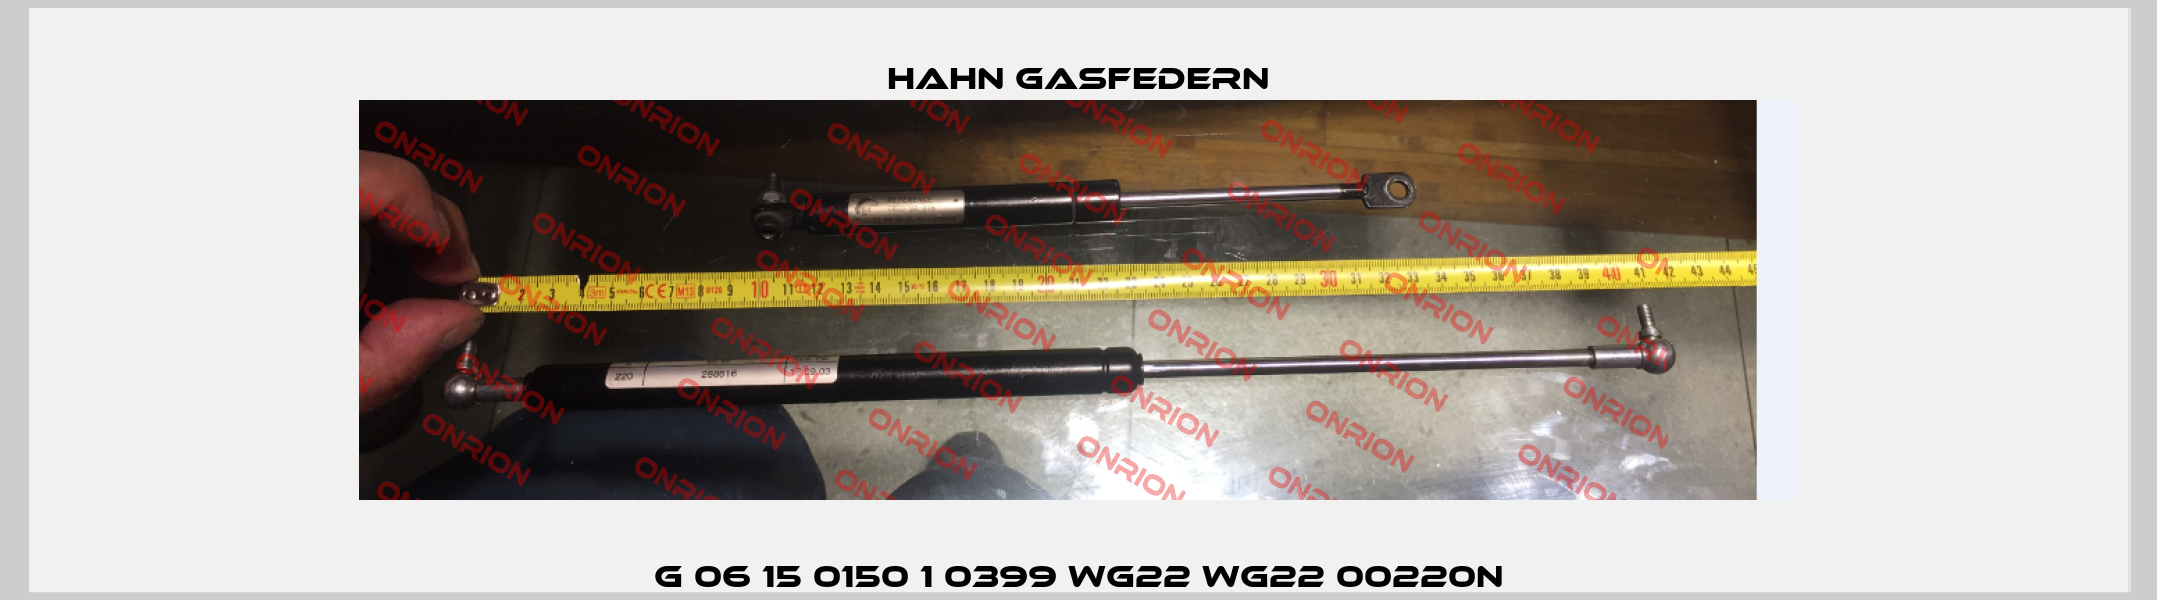 G 06 15 0150 1 0399 WG22 WG22 00220N Hahn Gasfedern